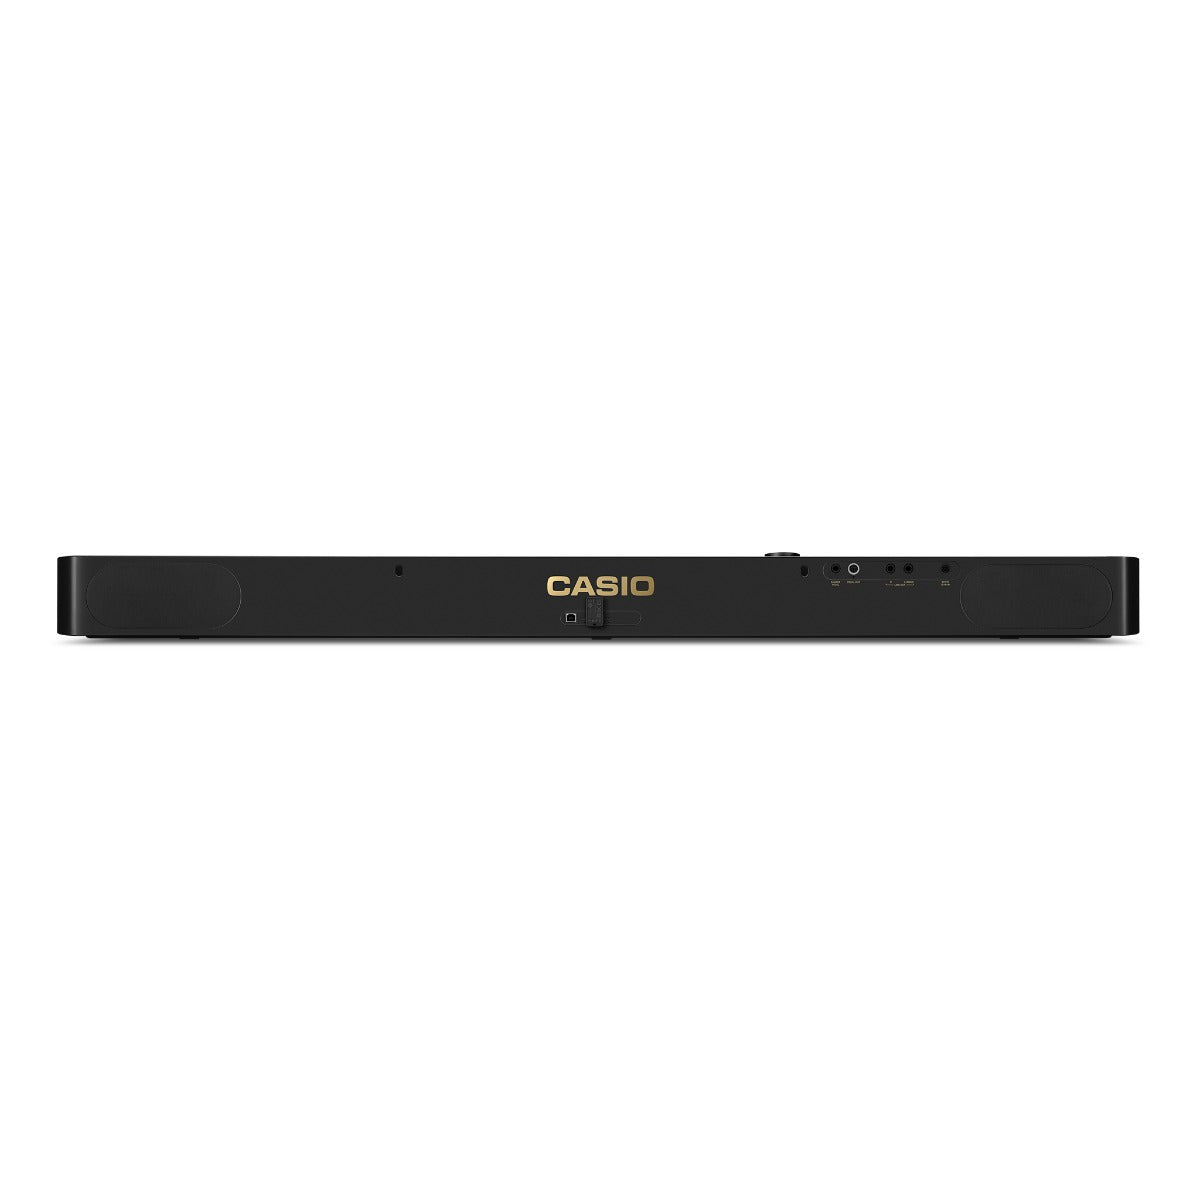 Casio PX-S5000 Digital Piano - Black